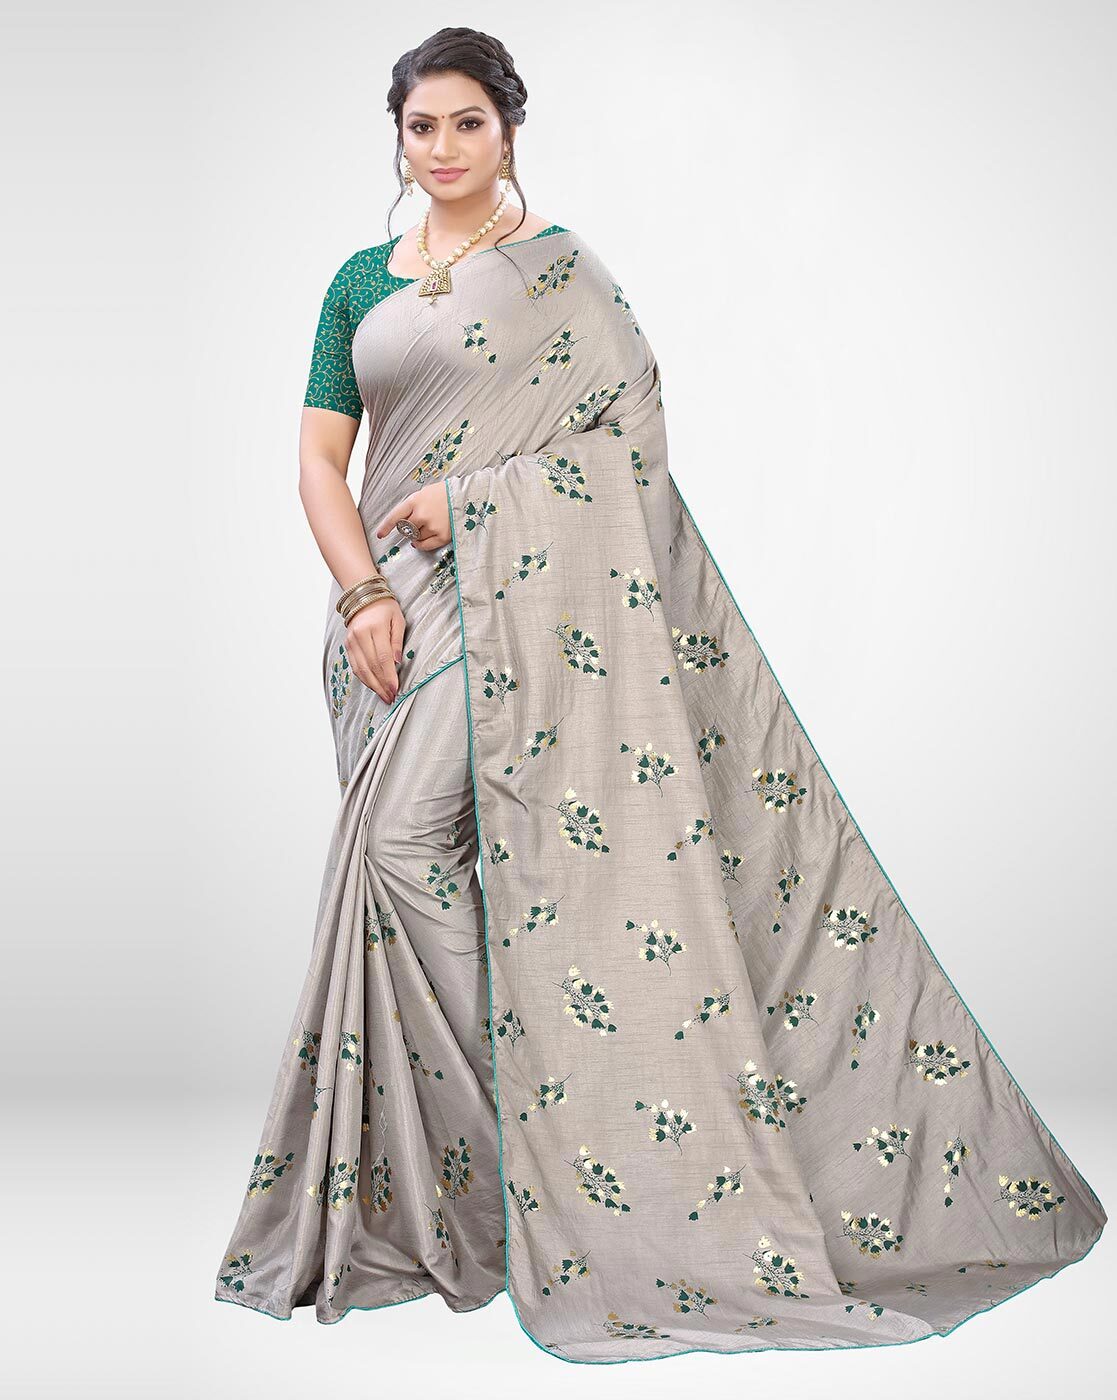 Kishore Fabrics Private Limited Vijayawada - Its a No: 1 textile wholesaler  in AP